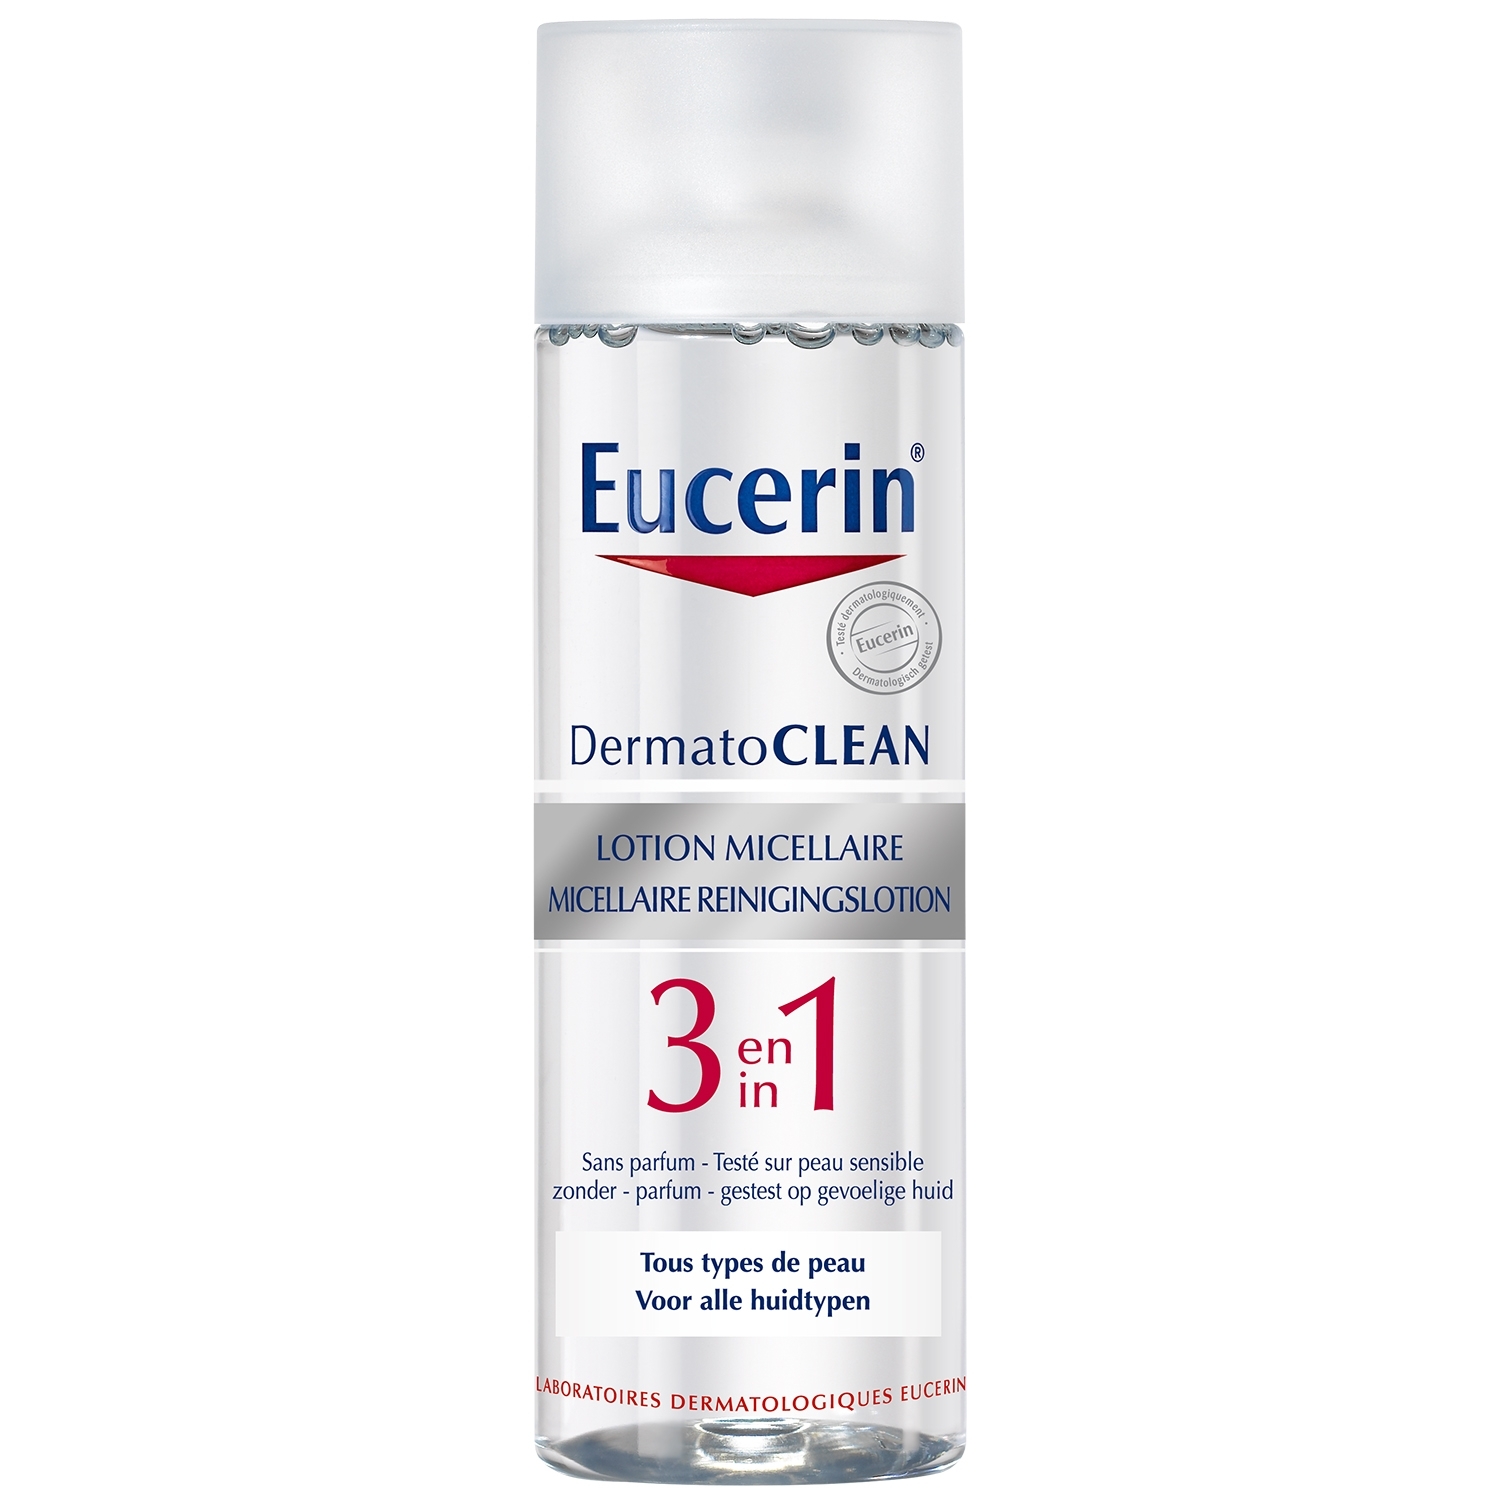 Eucerin Dermatoclean lotion micellaire - 3 en 1  - 200 ml